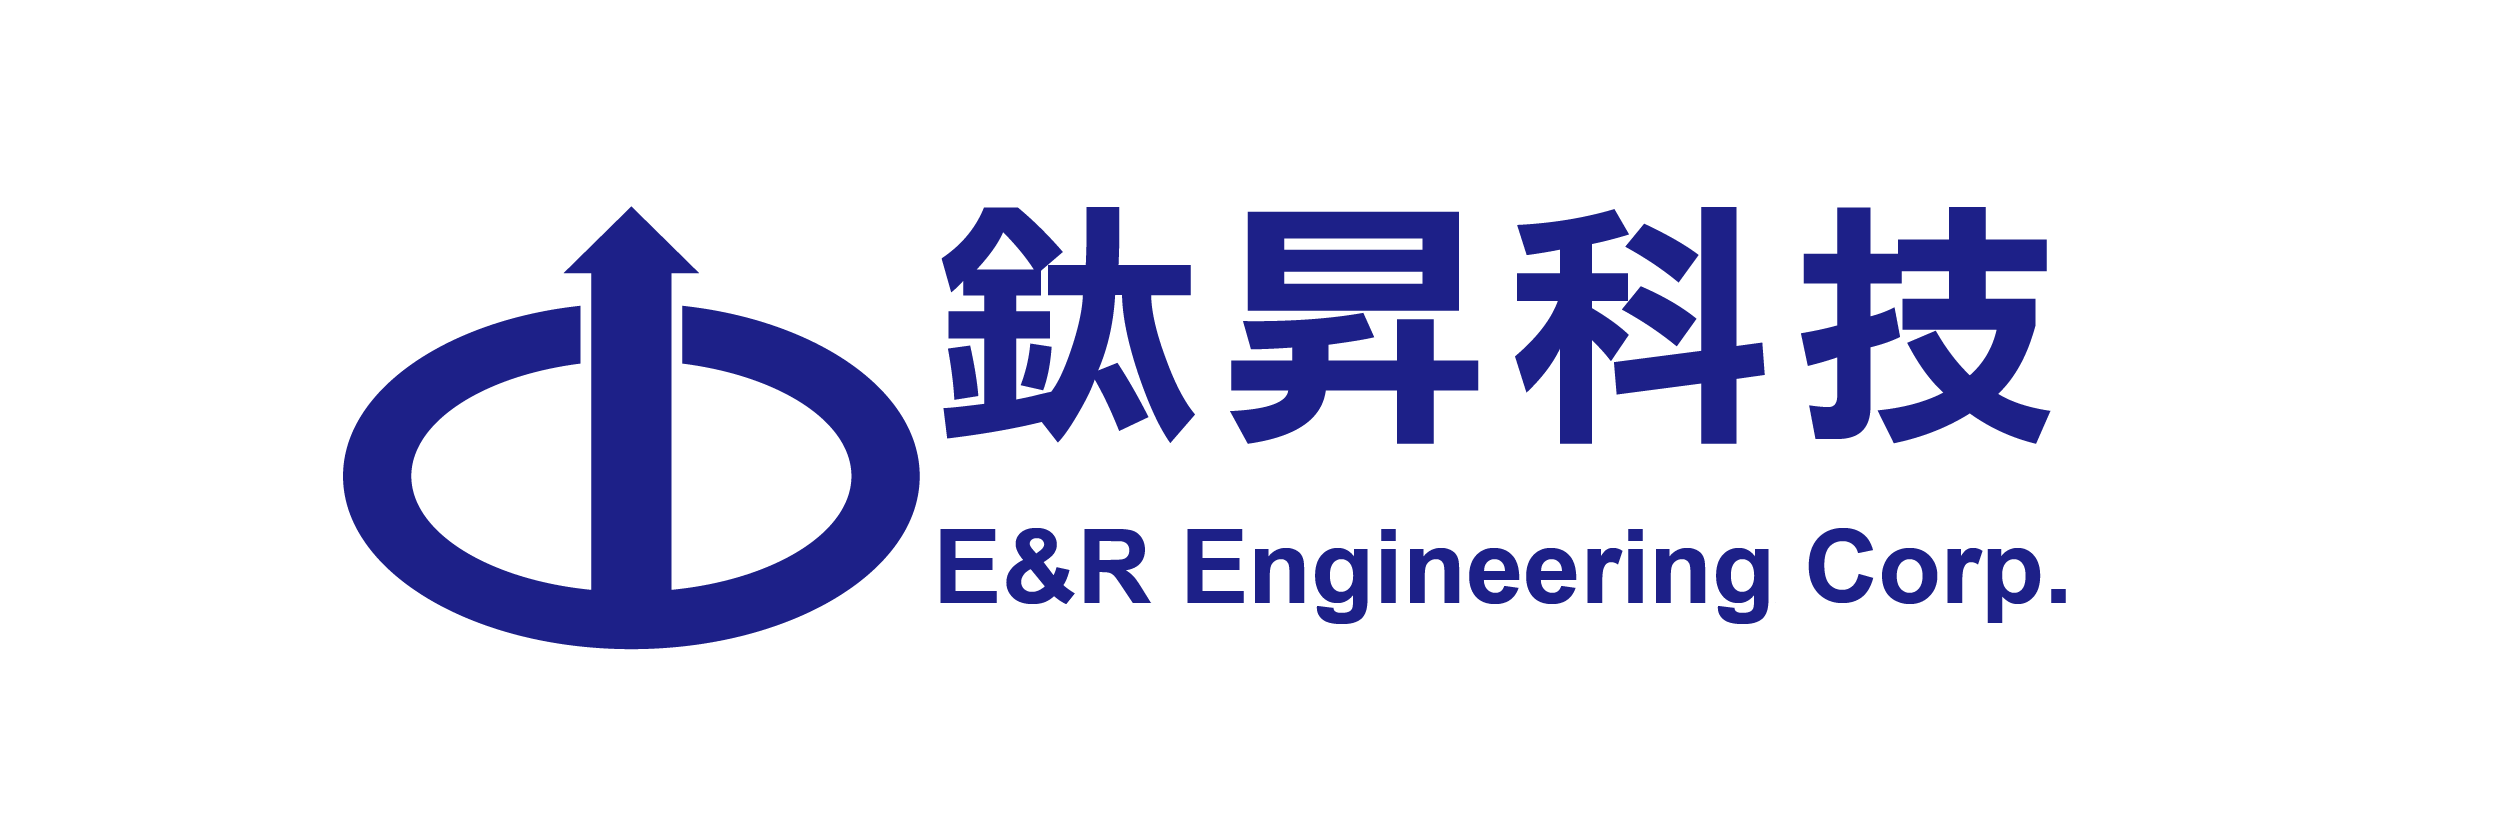 E&R Engineering Corp.